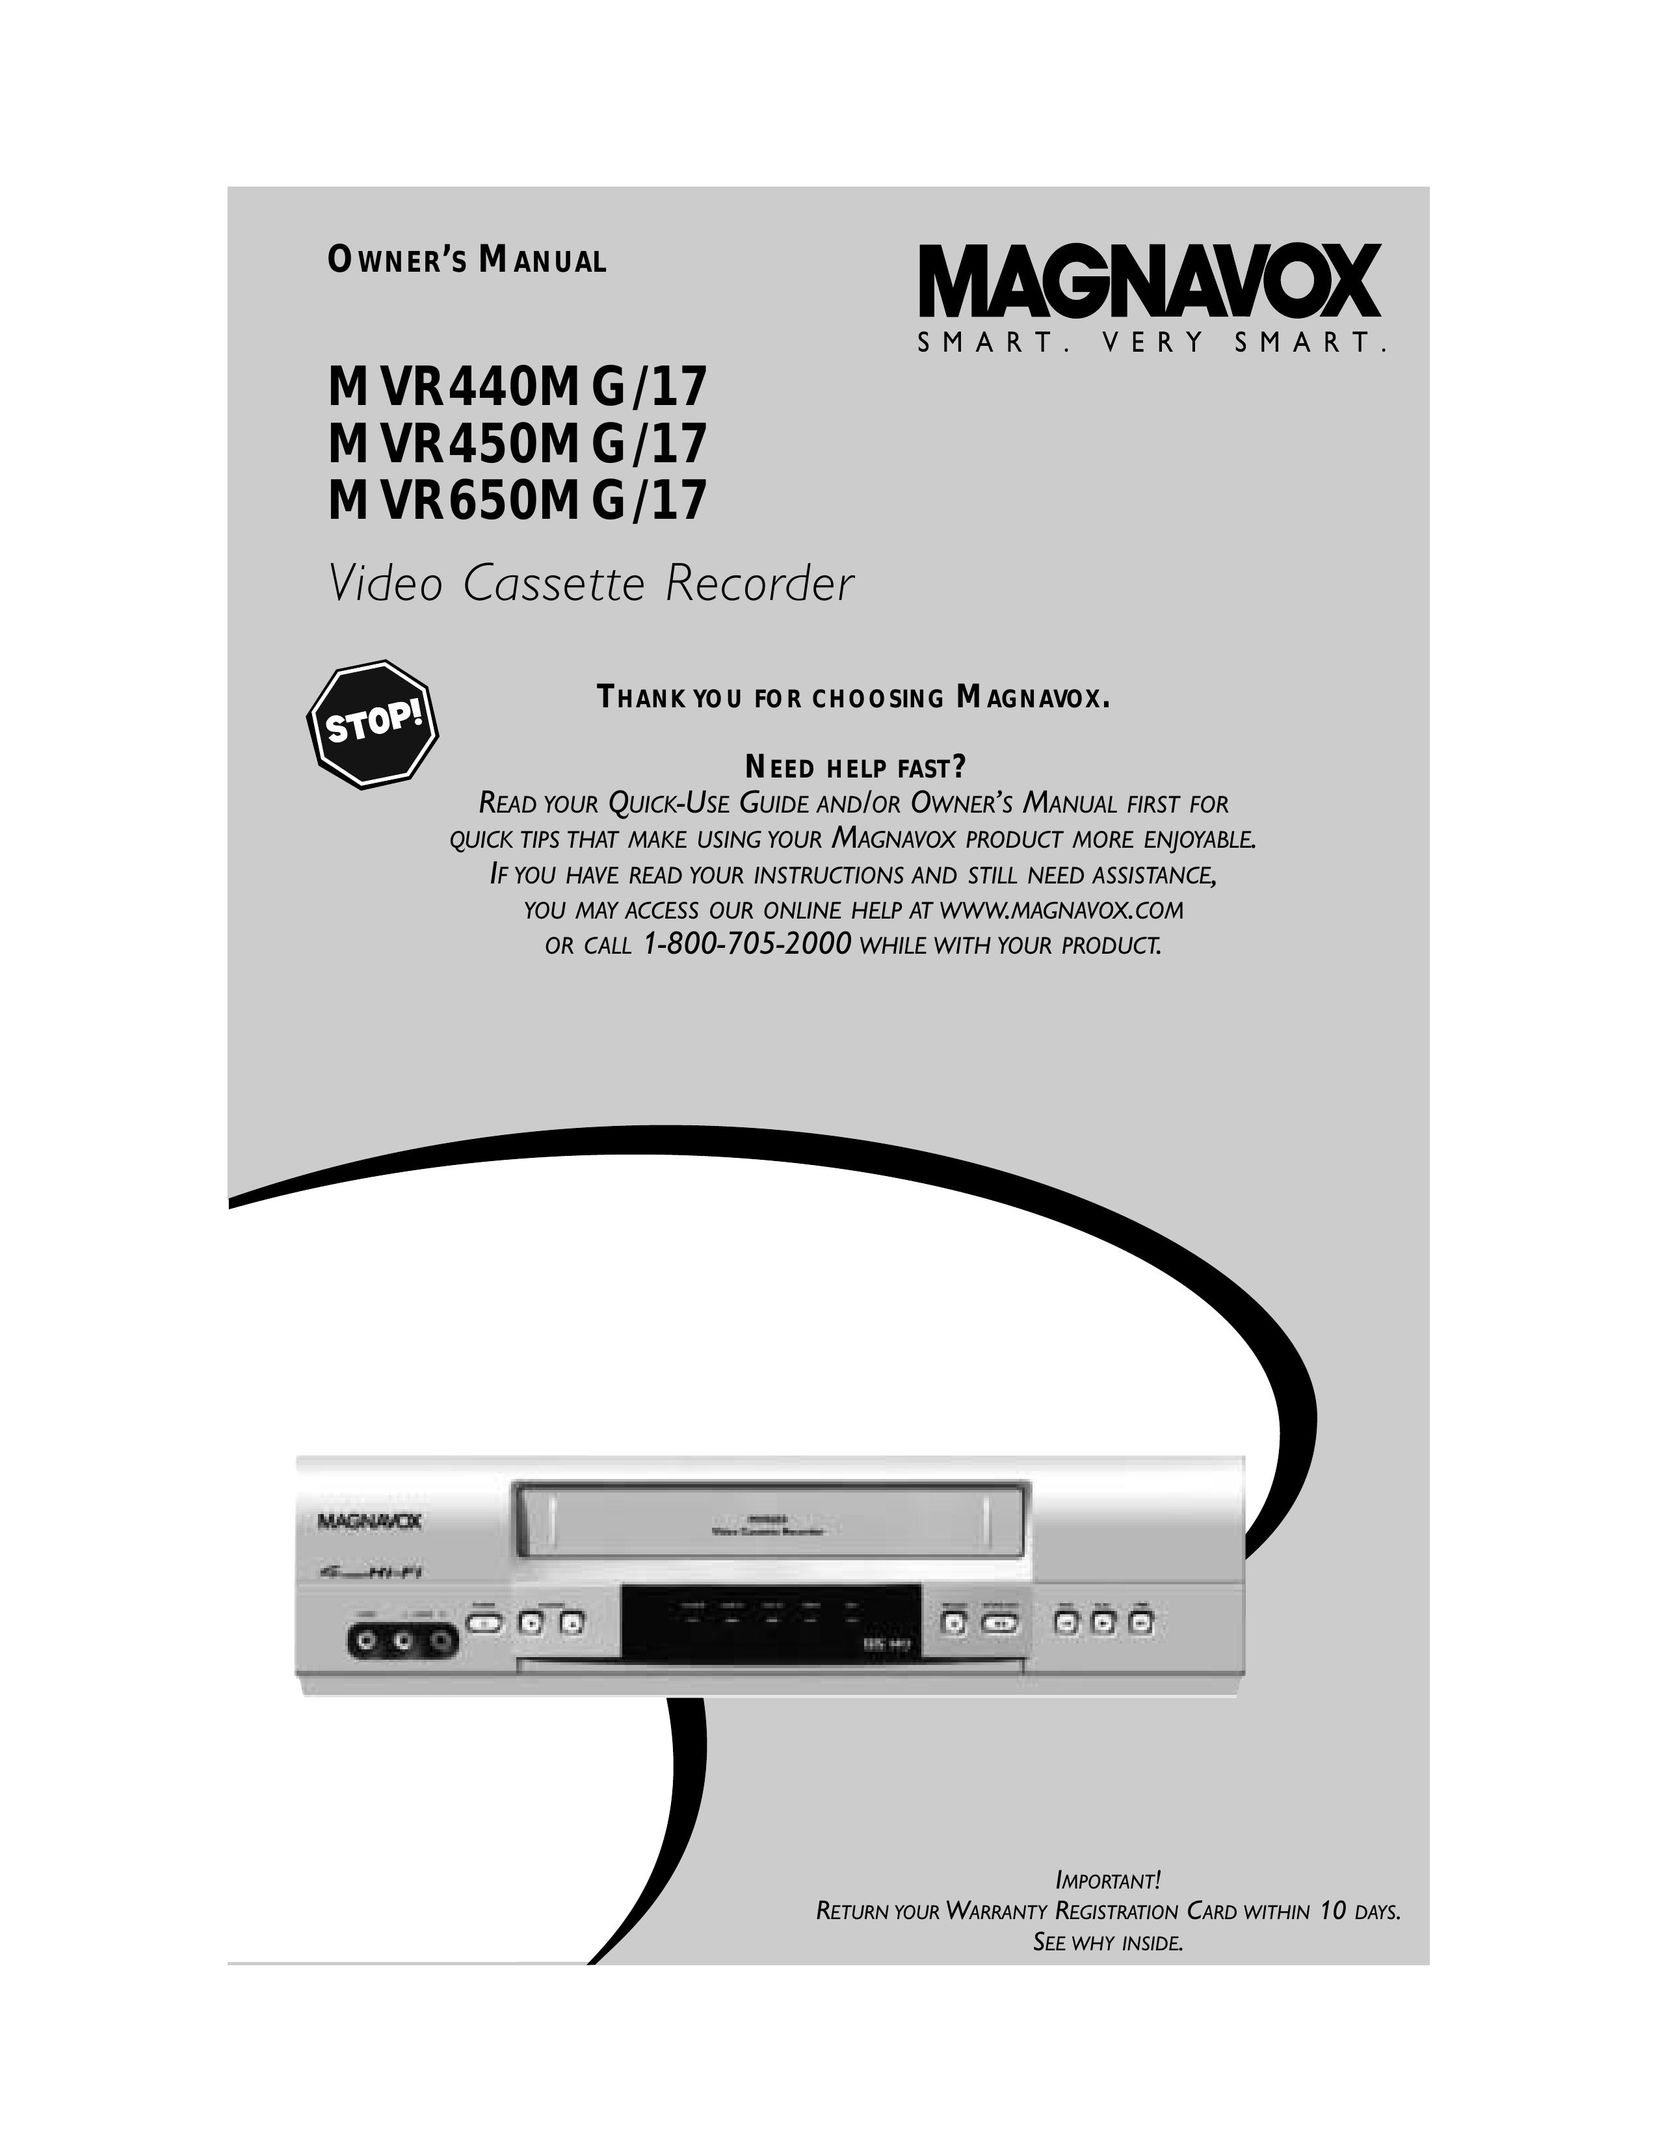 Magnavox MVR450MG/17 VCR User Manual